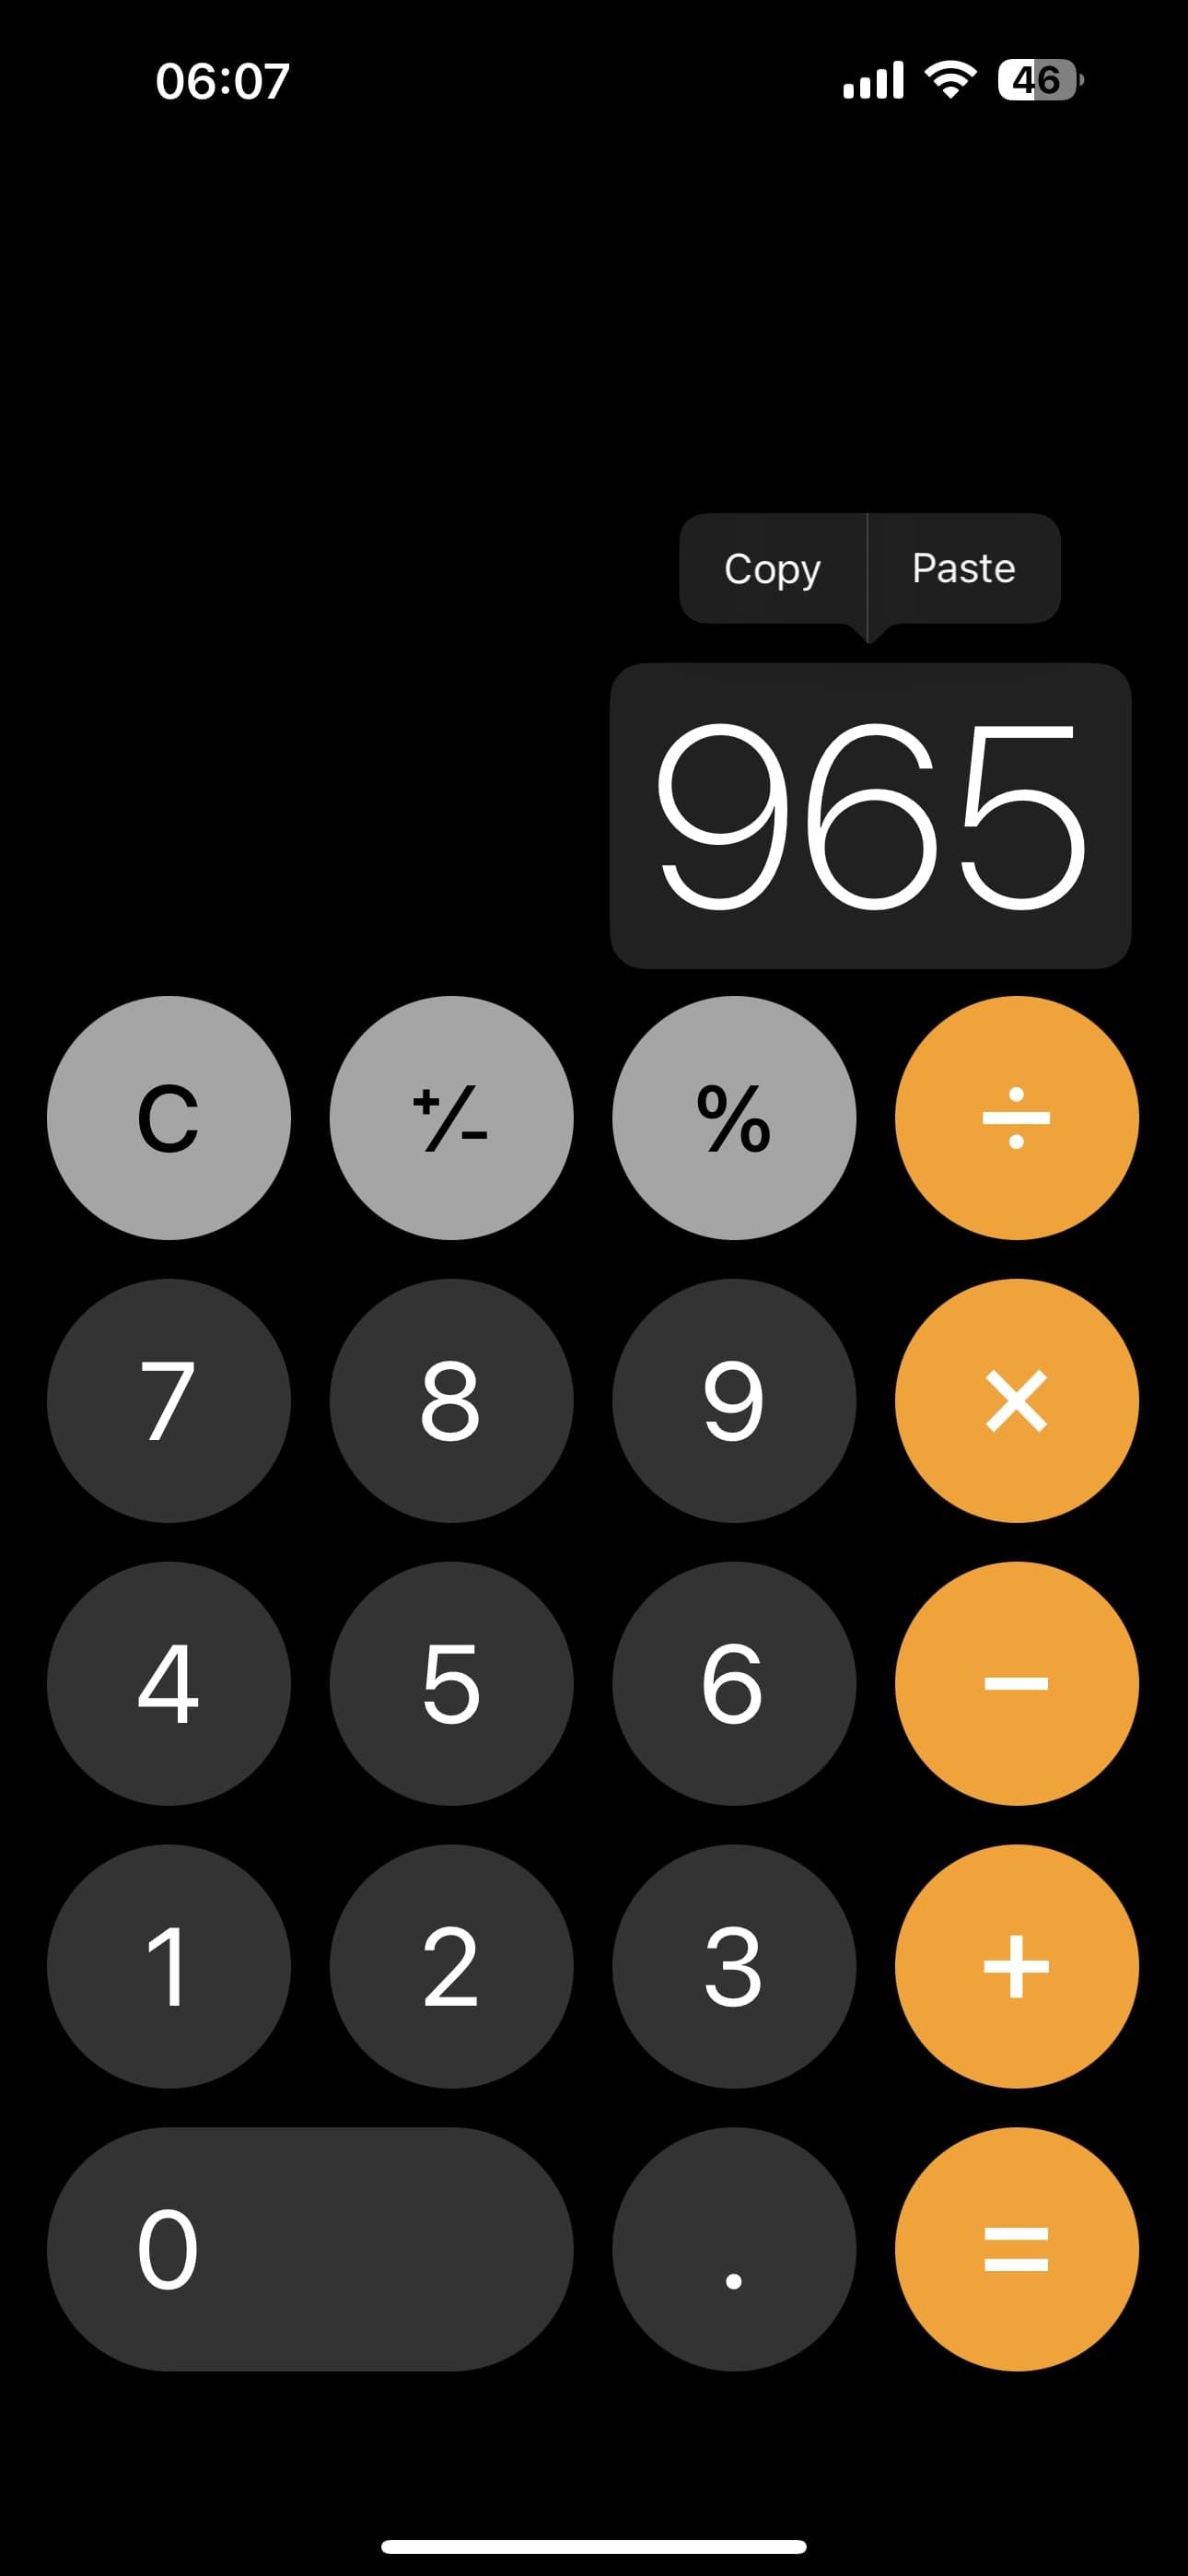 Copy iPhone calculator results